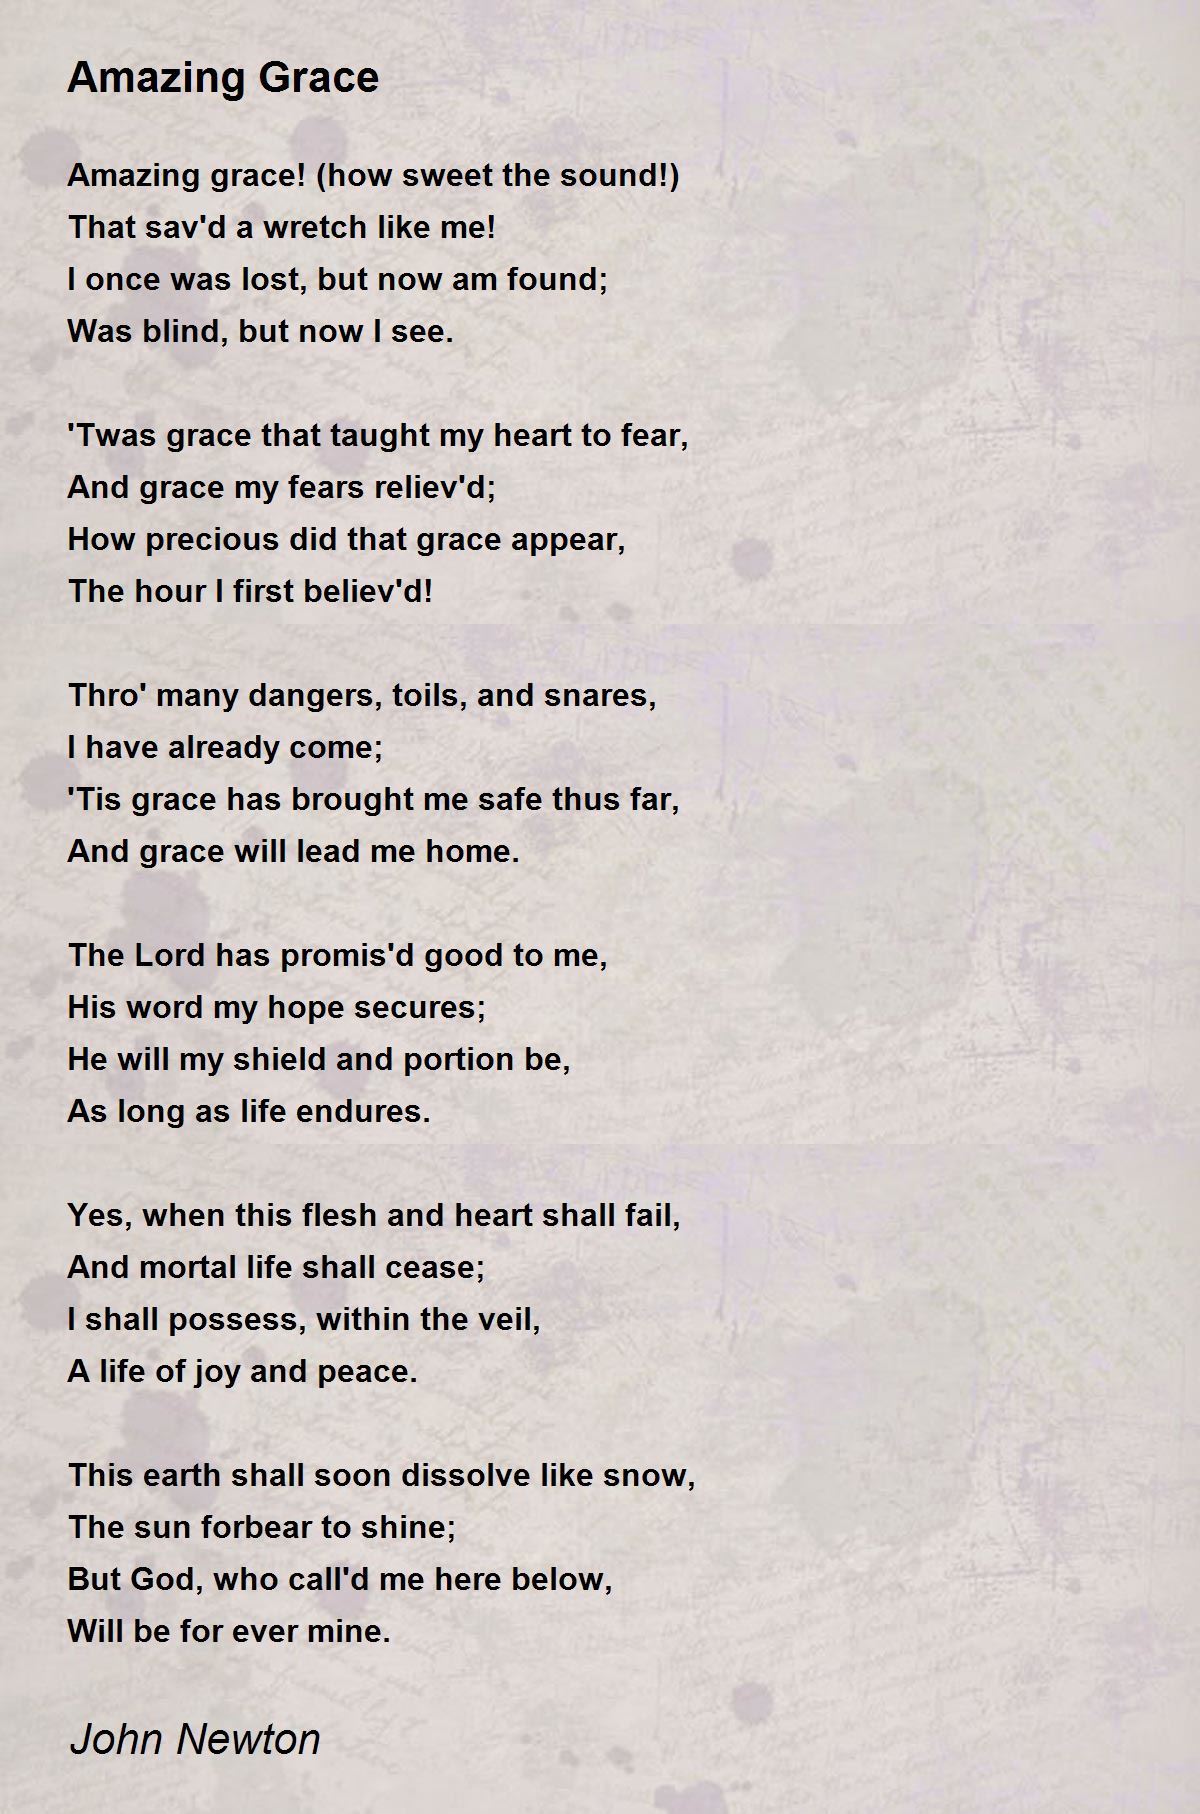 Amazing Grace Poem by John Newton - Poem Hunter